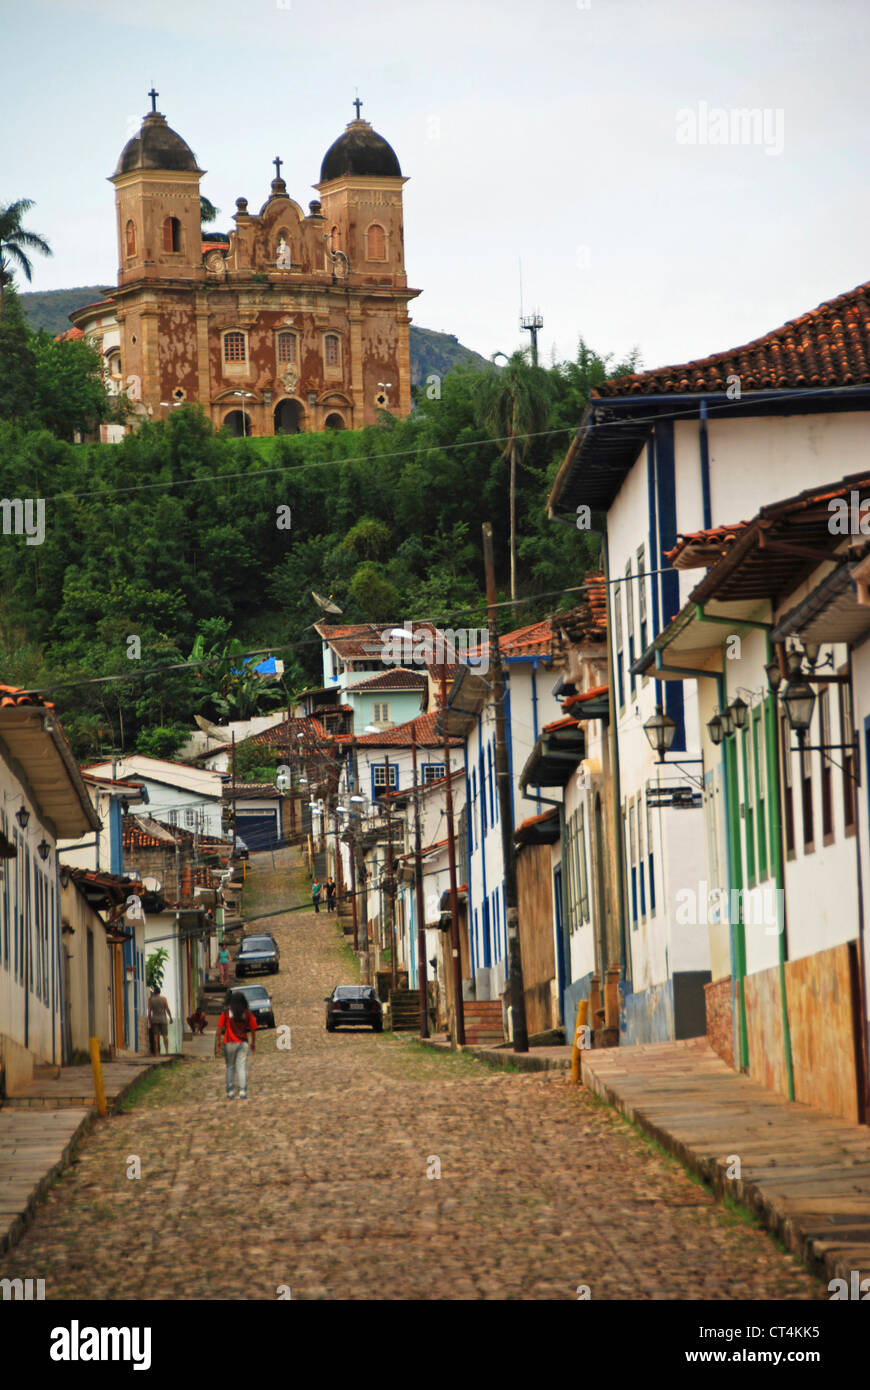 Brazil, Minas Gerais, Mariana, Igreja Sao Pedro dos Clerigos, old colonial church at the end of cobble street Stock Photo